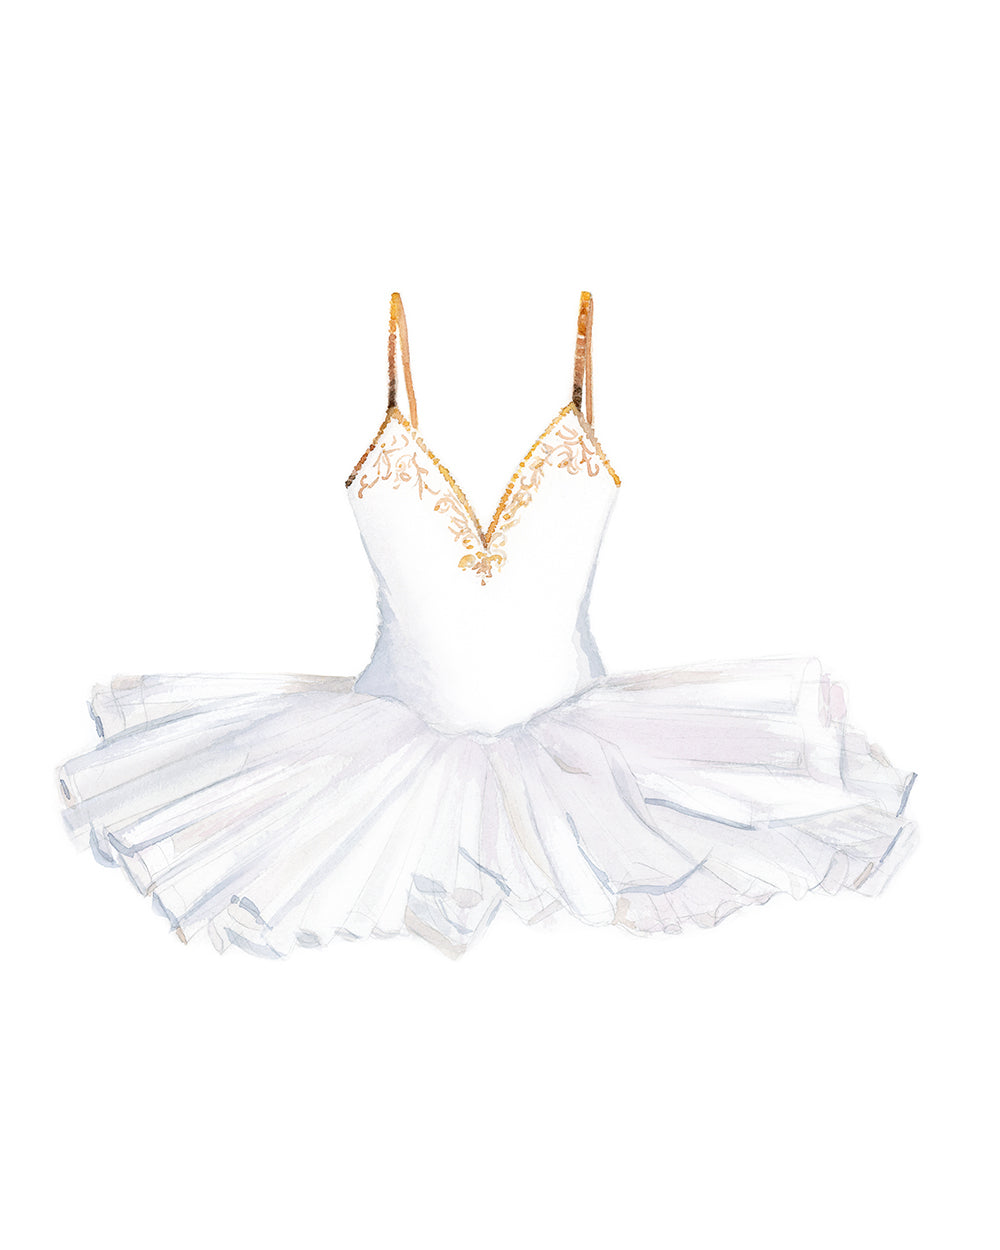 White and Gold Ballerina Dress - Art Print